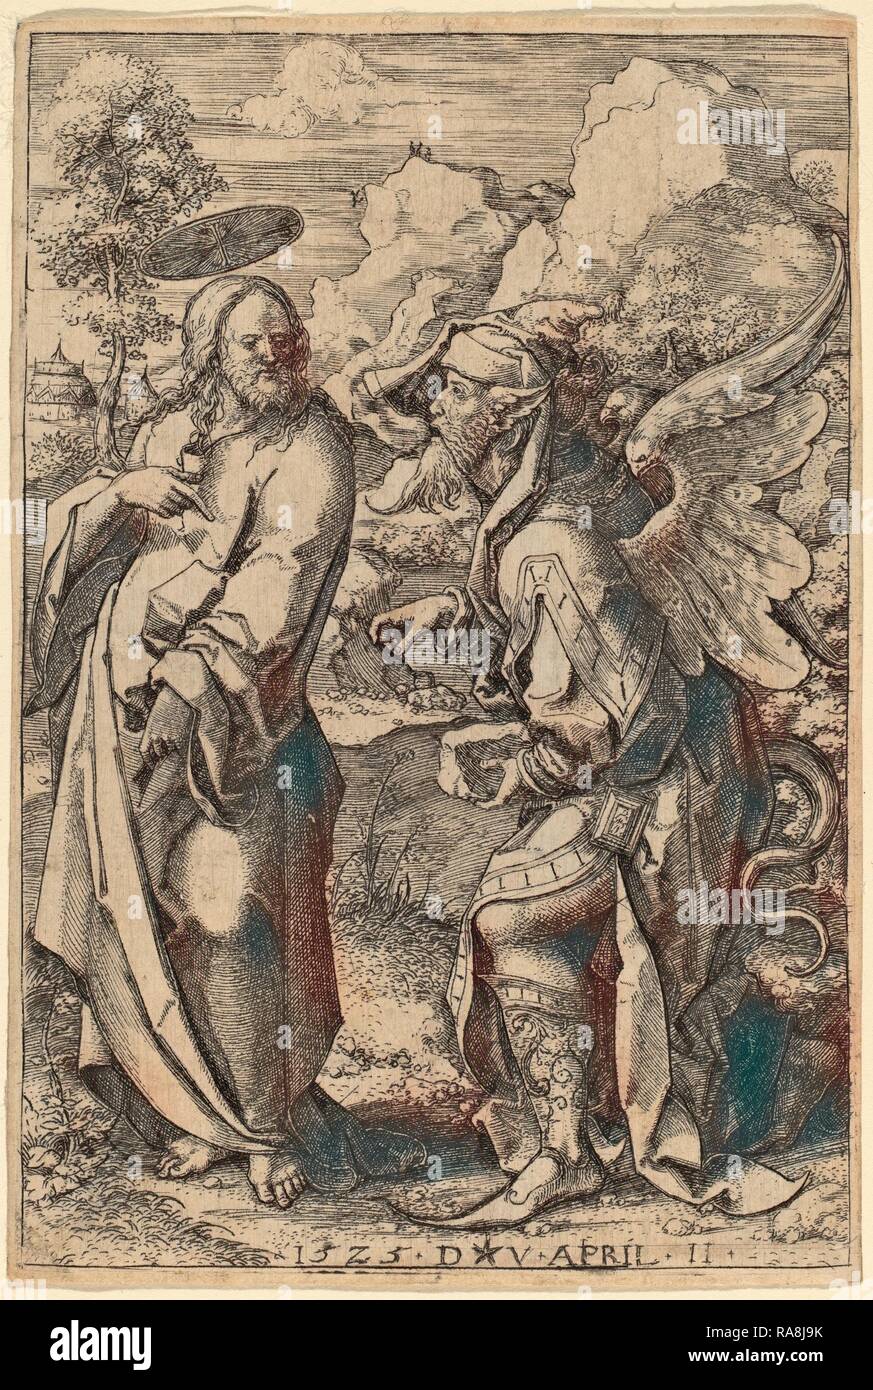 Dirk Jacobsz Vellert (Flemish, active 1511-1544), The Temptation of ...